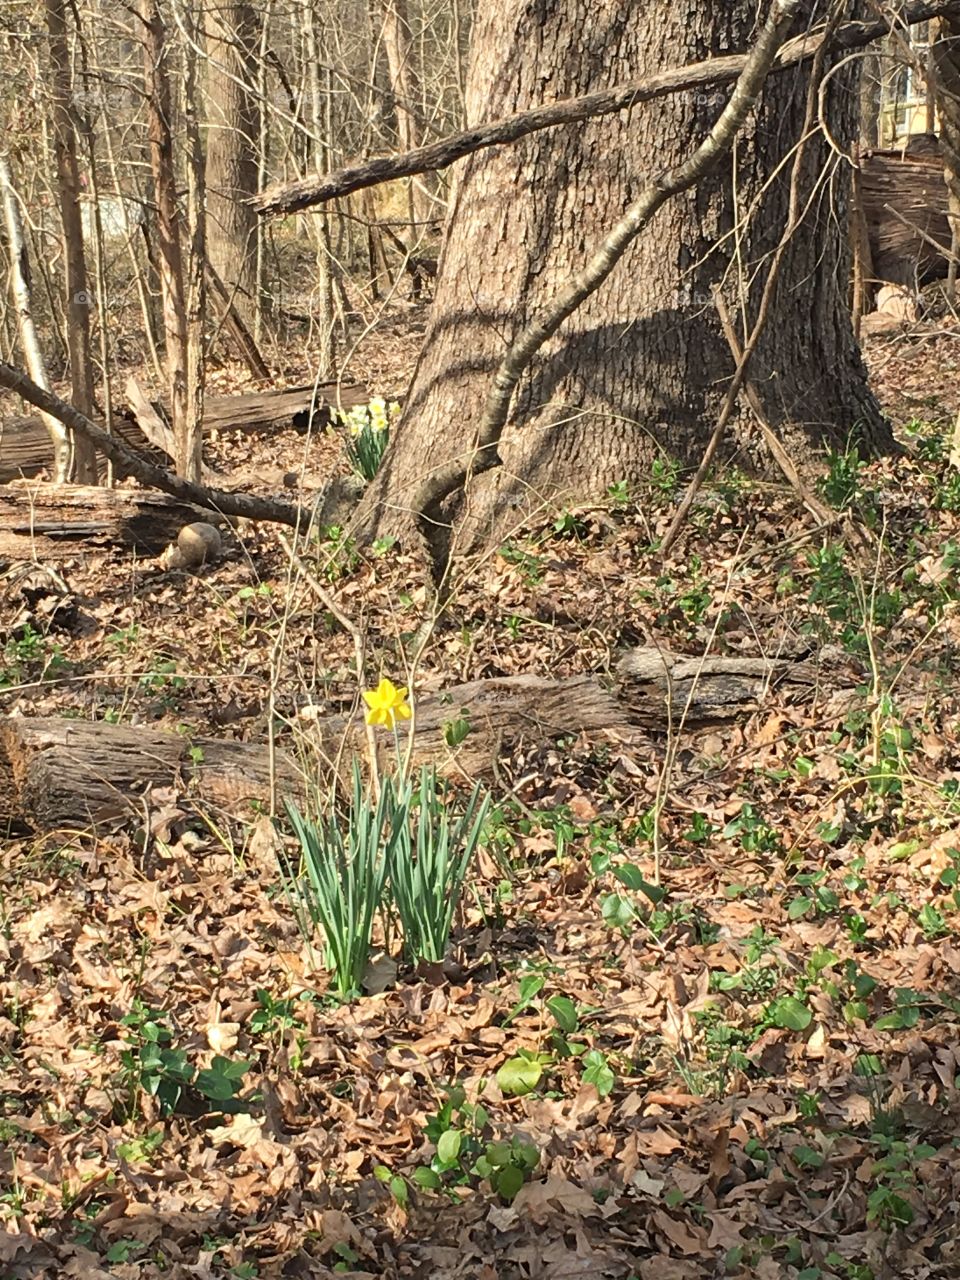 Daffodil stands alone